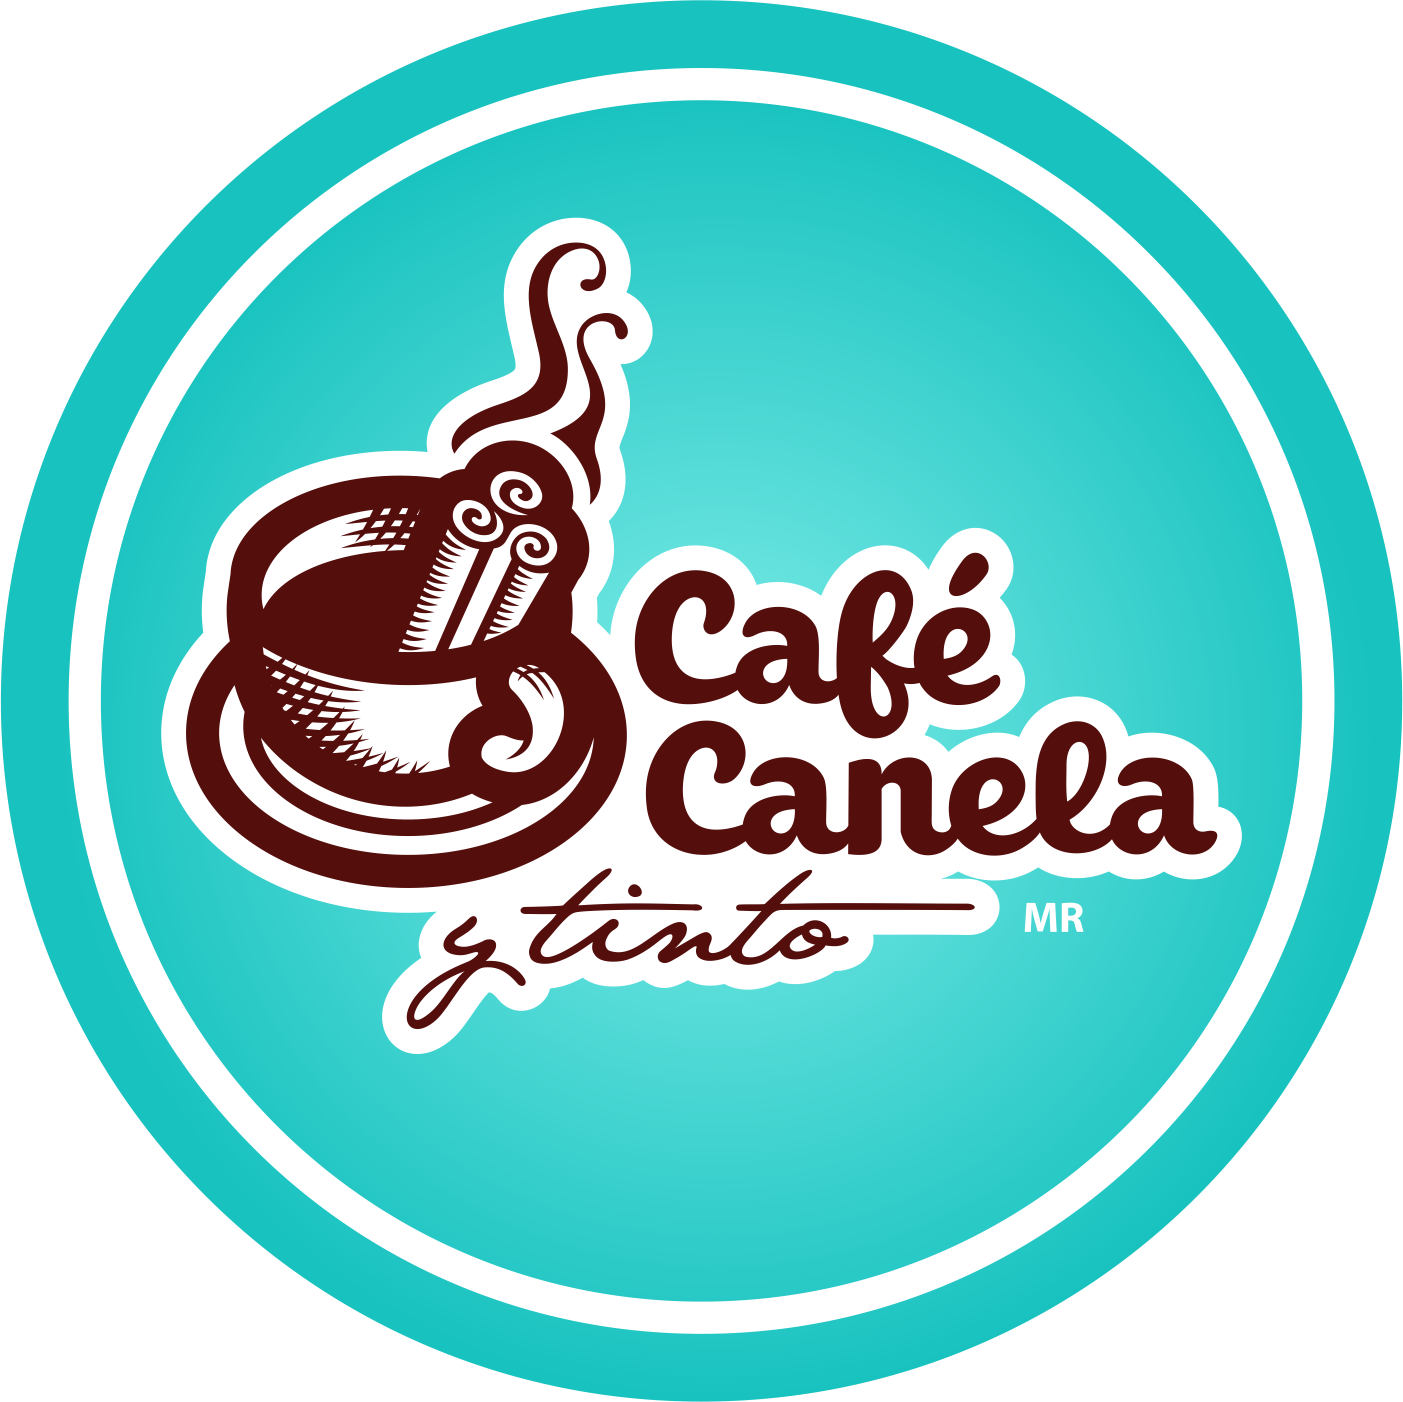 Café, Canela y Tinto